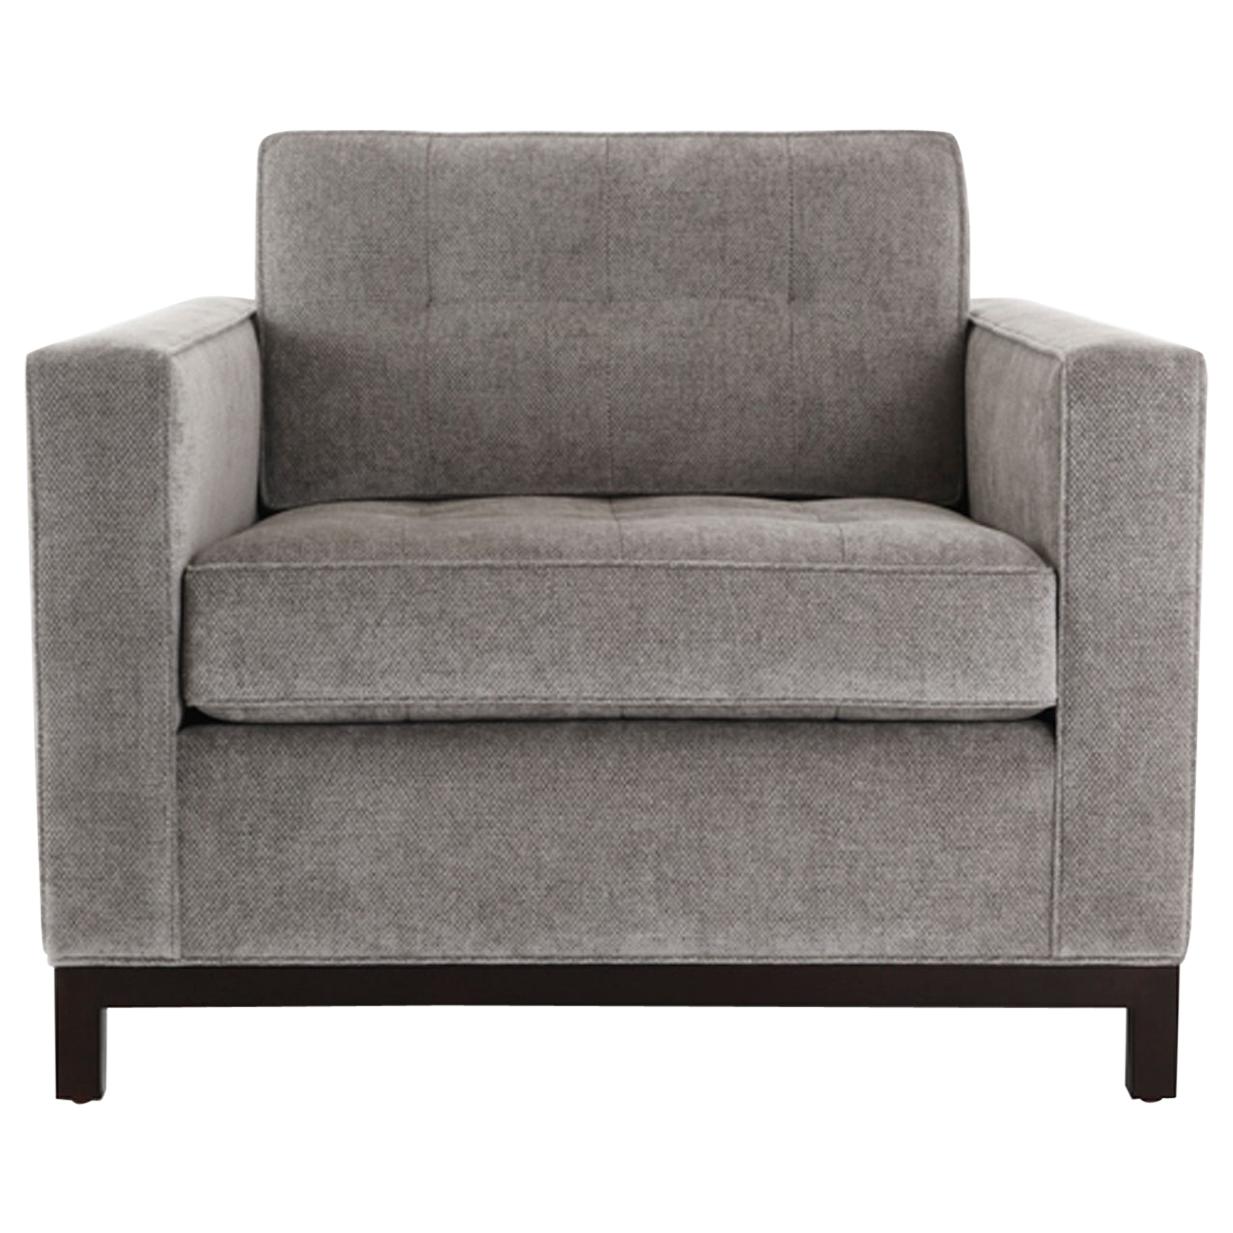 Carson Chair-Wood Base, Pull Tufting, Loose Seat & Back cushion, Arm chair, Legs